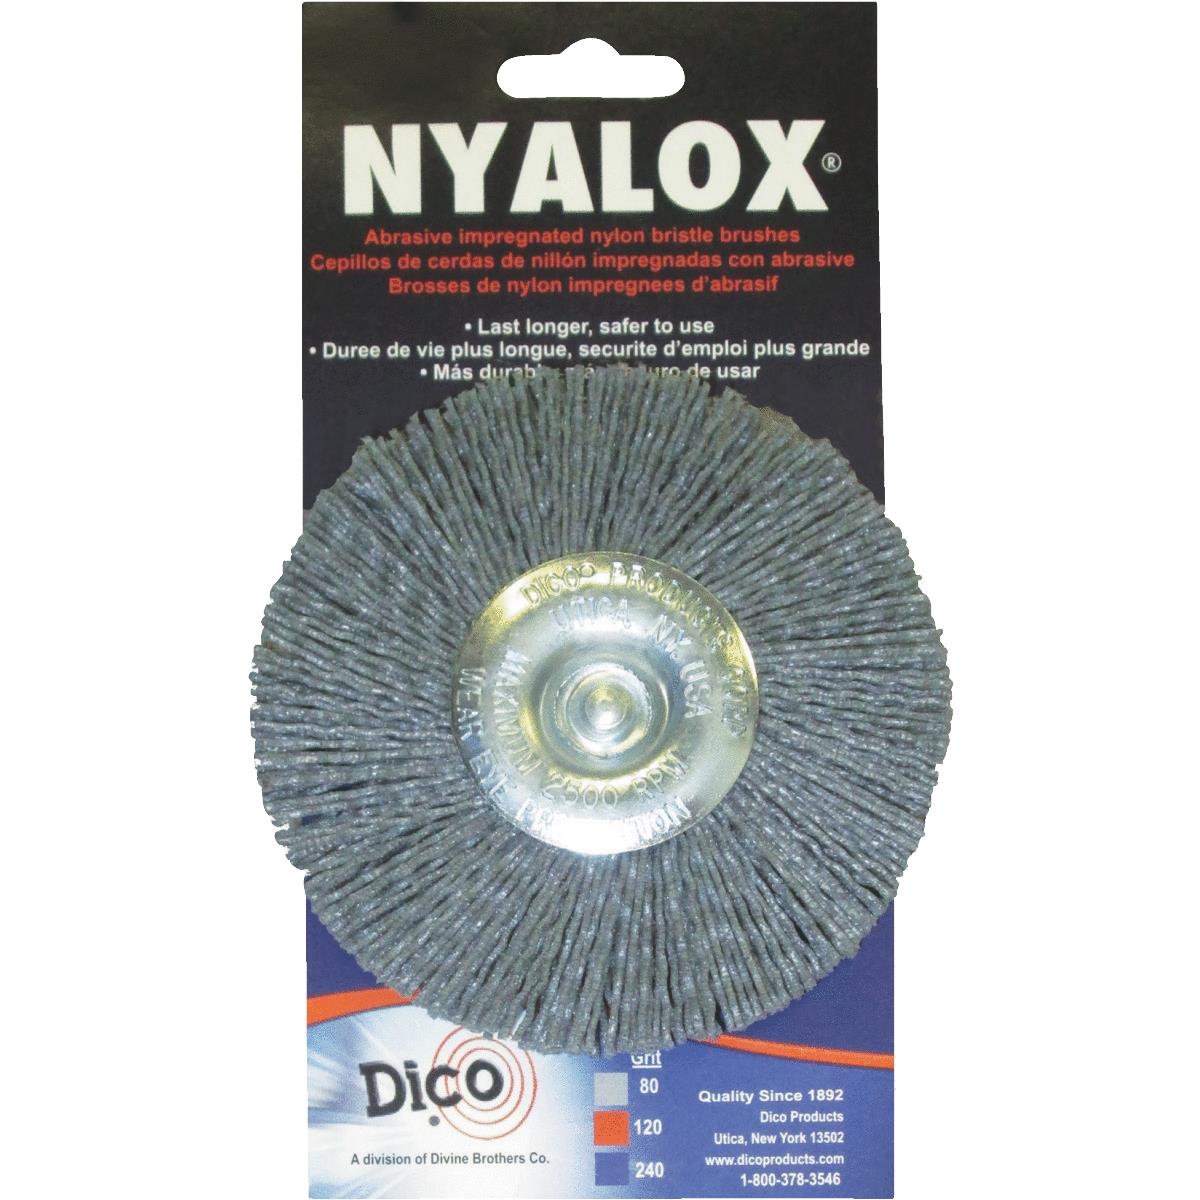 Dico 7200036 4" Coarse Nyalox Wire Wheel Brush for sale online 